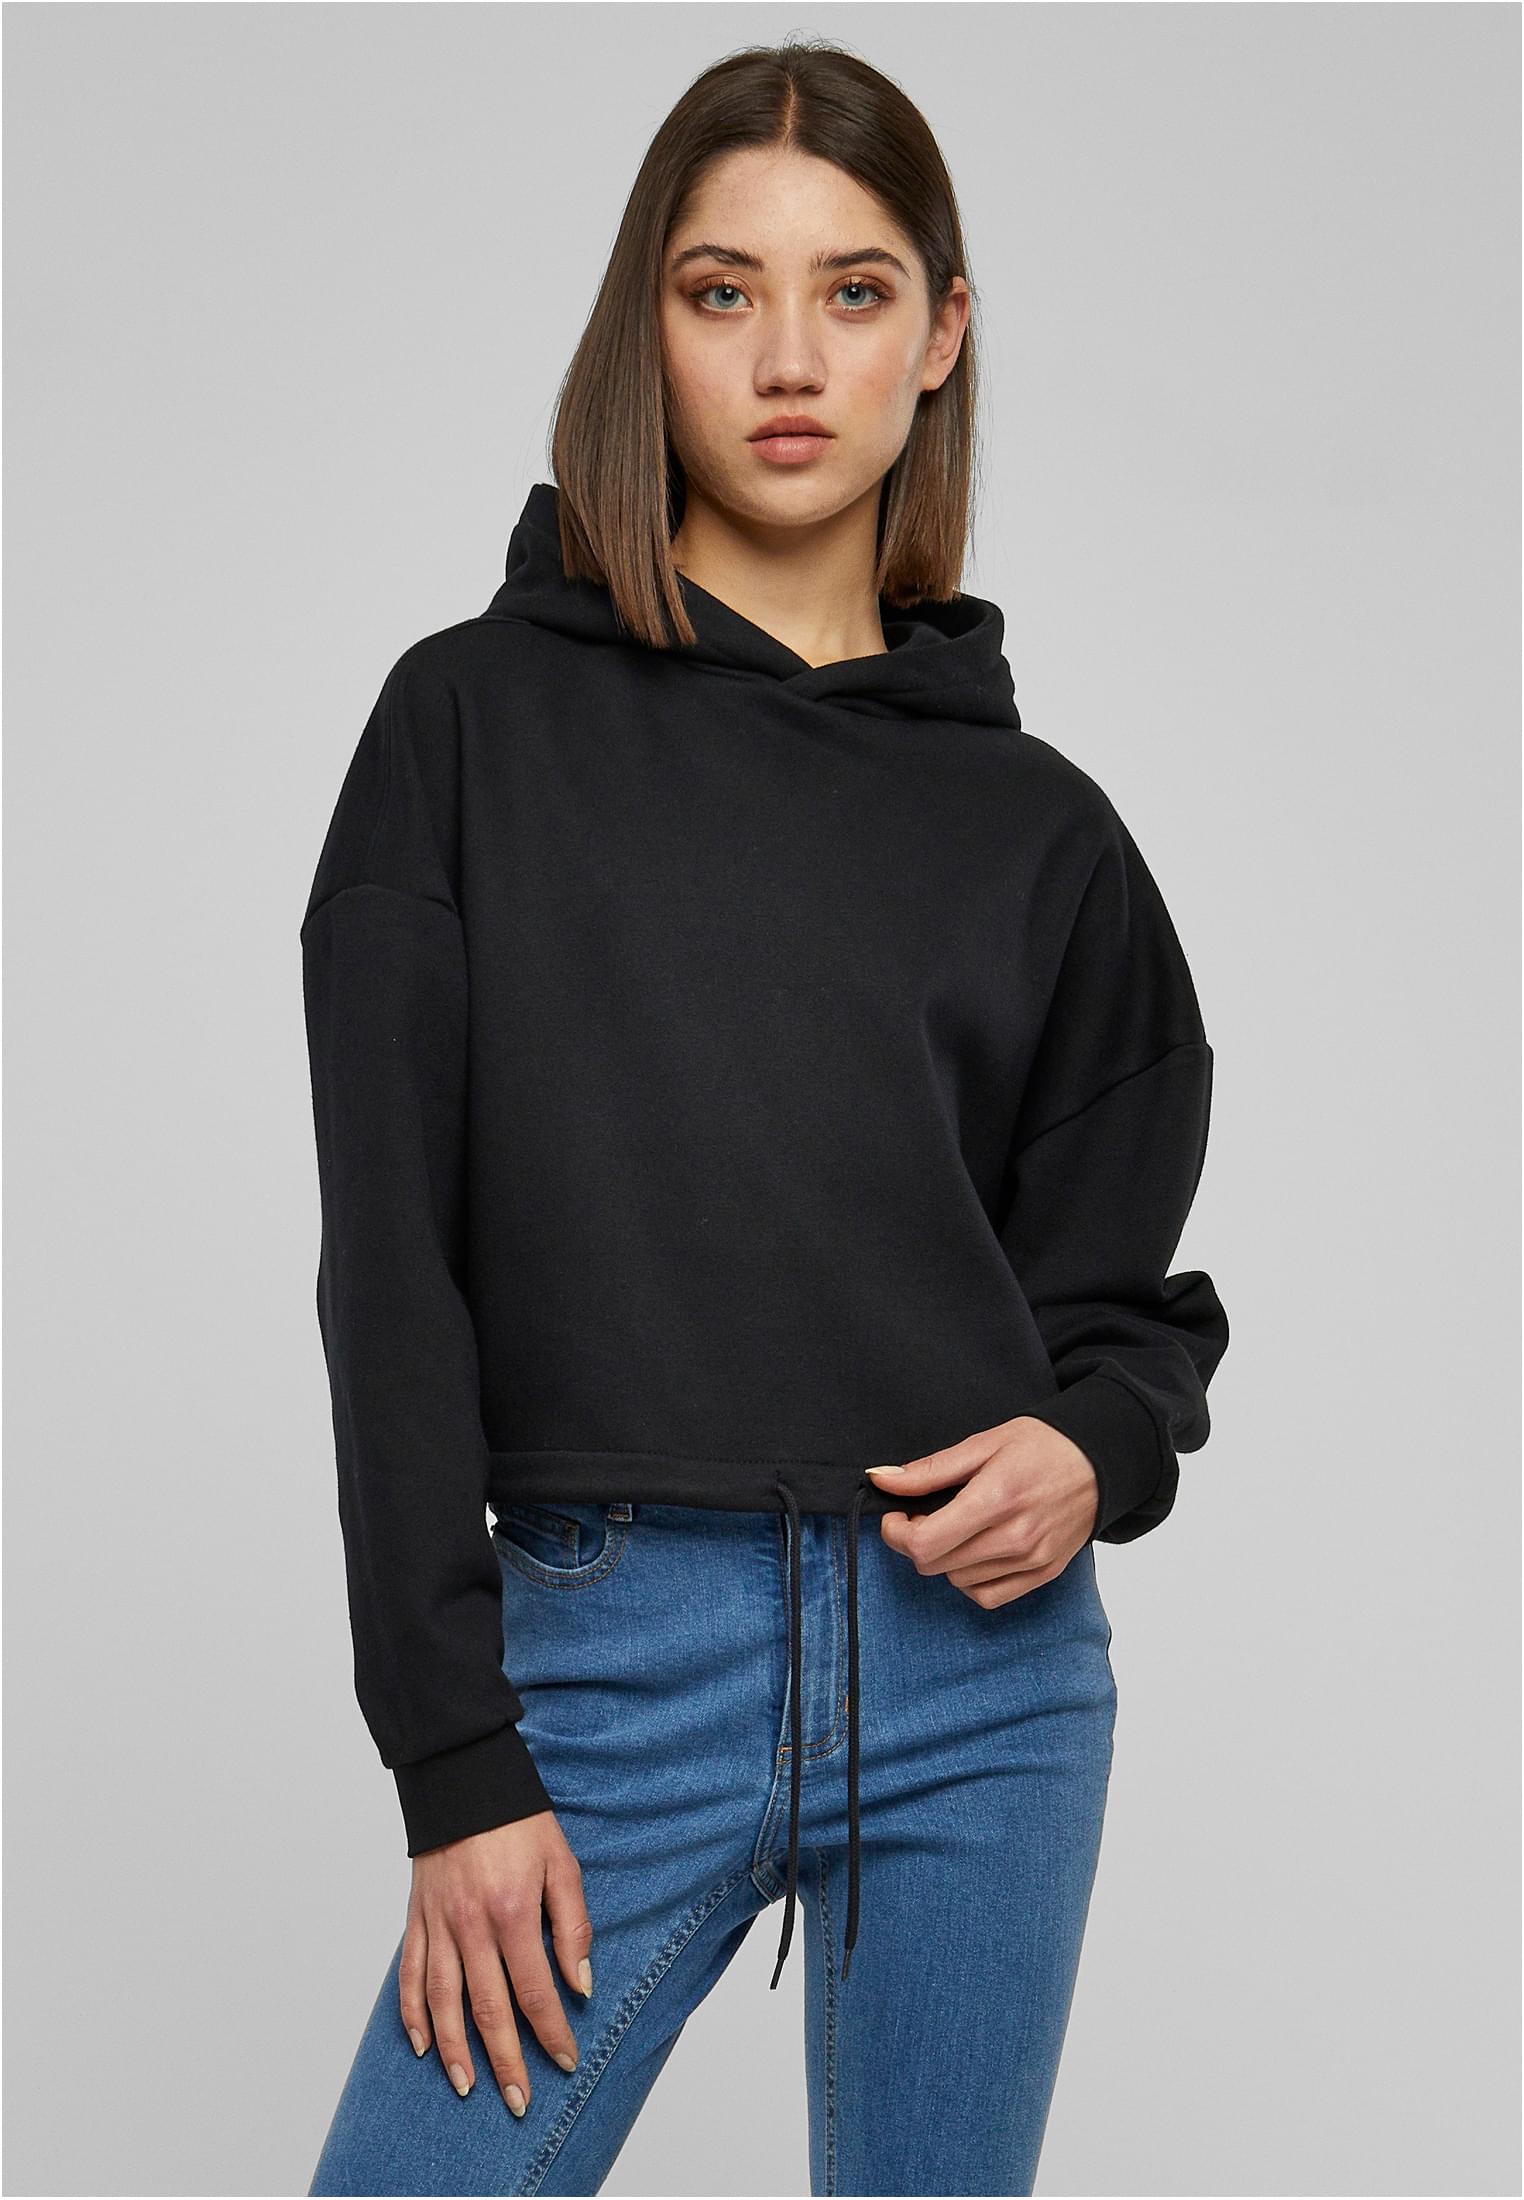 Women's oversized hoodie in black